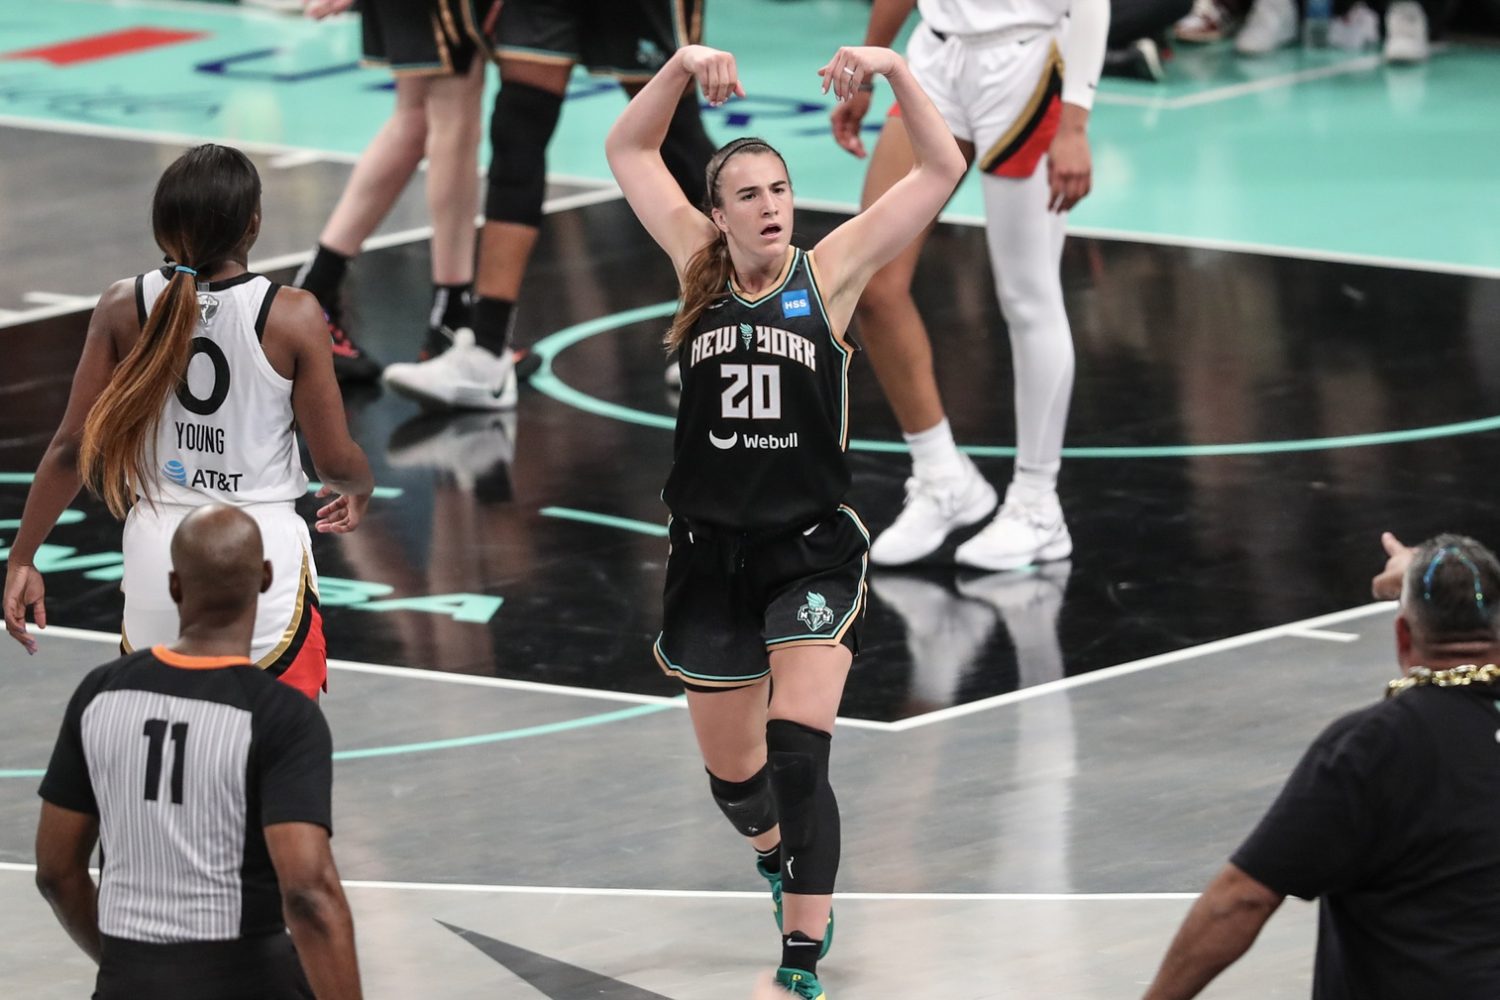 WNBA Finals Sets 20Year Viewership High Through 3 Games